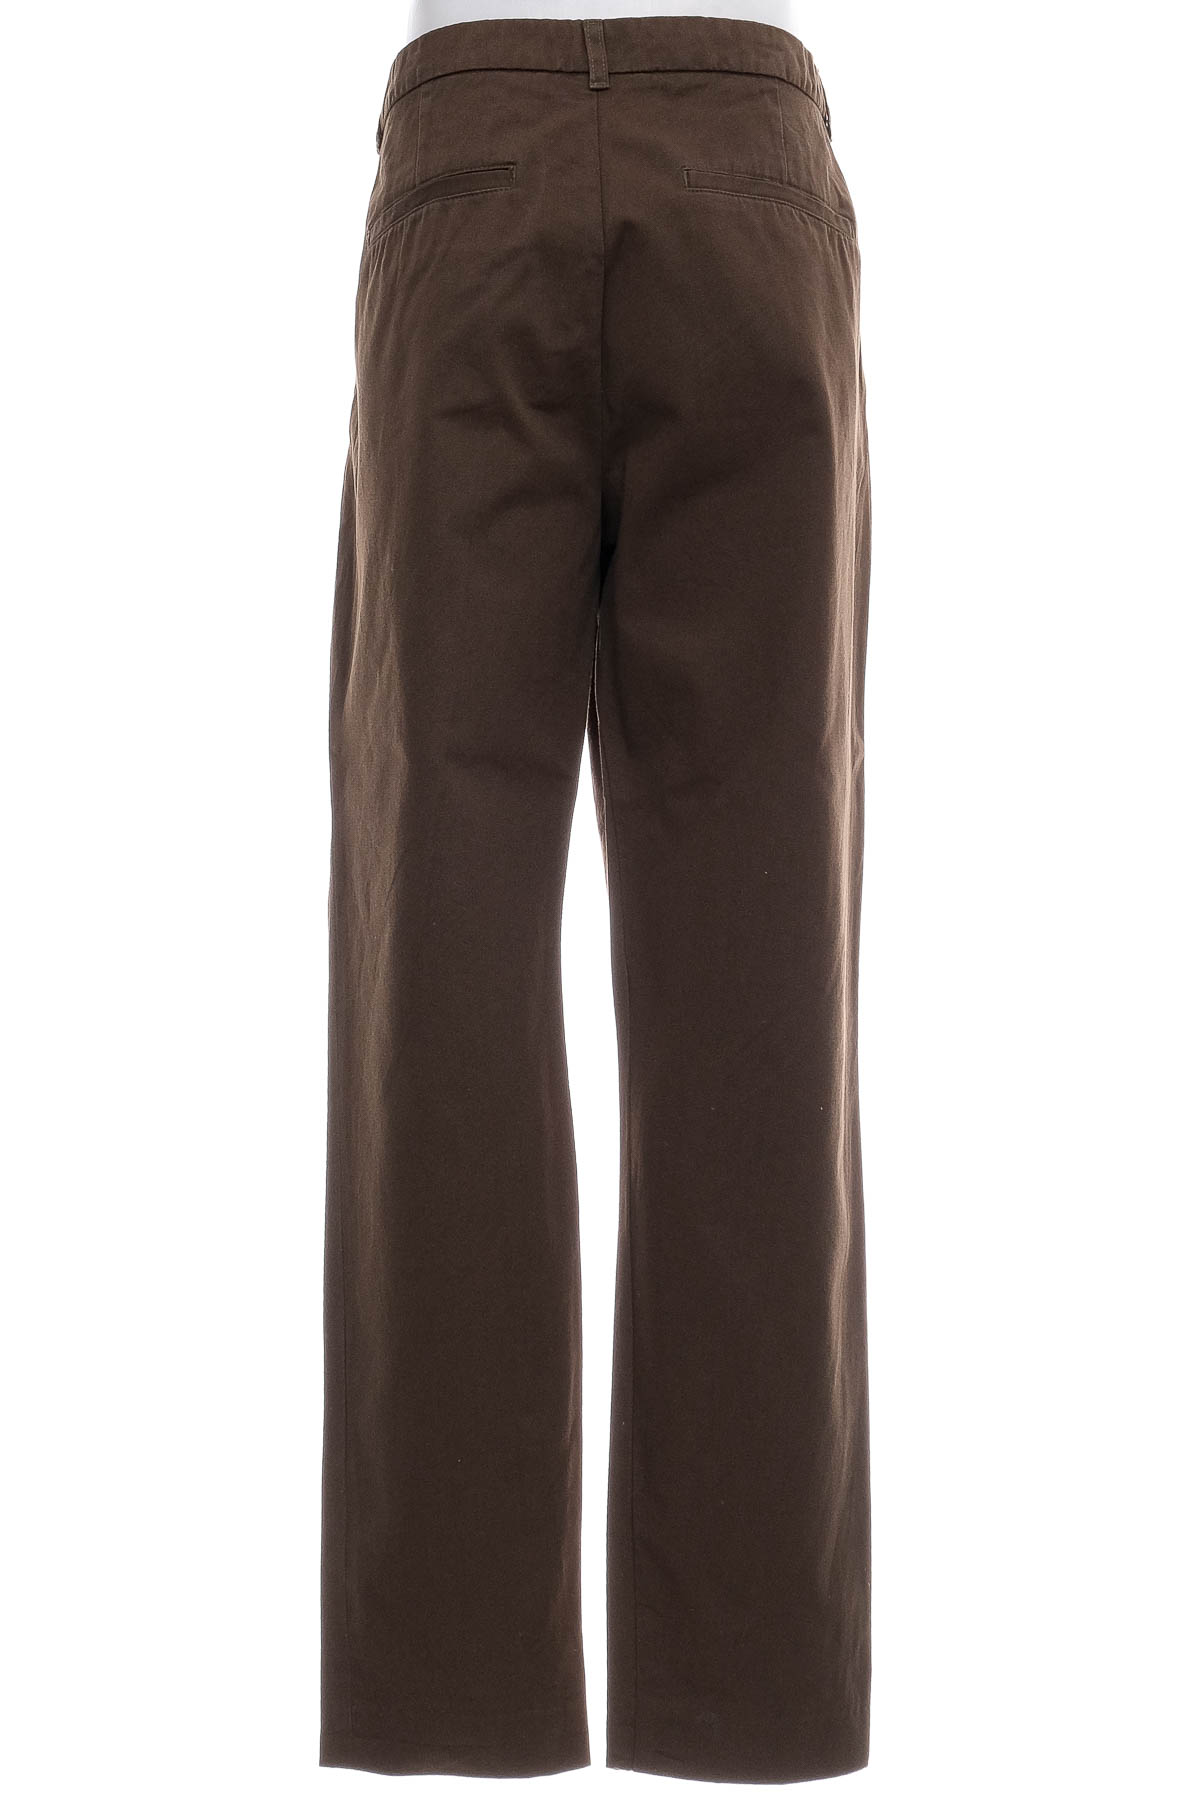 Pantalon pentru bărbați - American Vintage - 1